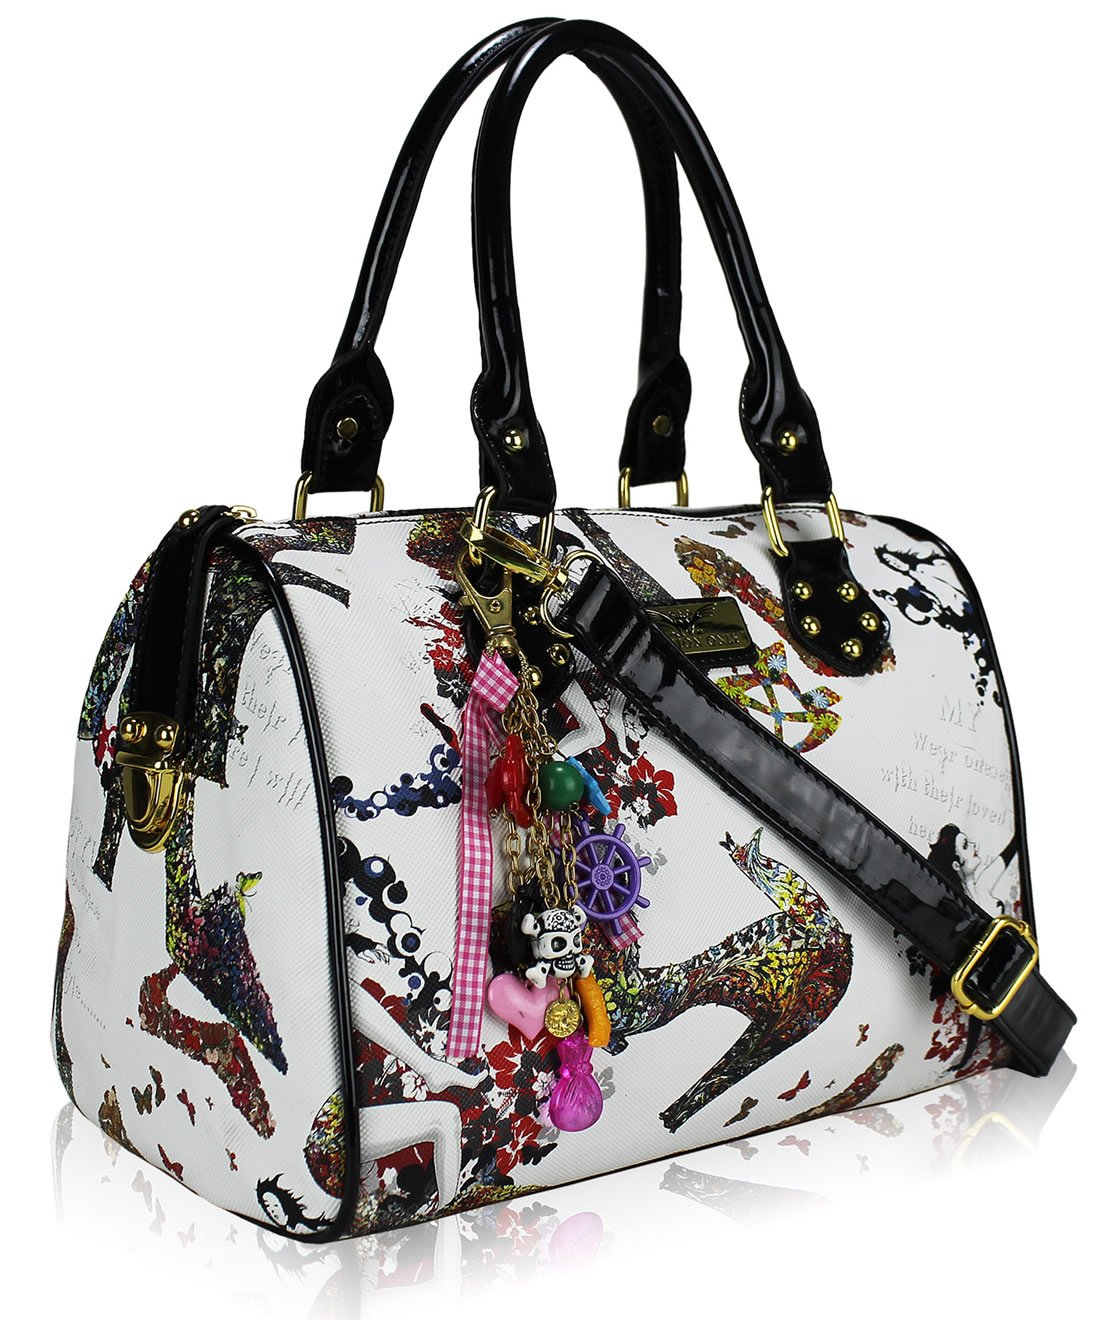 Wholesale bag - White Fashion Tote Bag With Charm